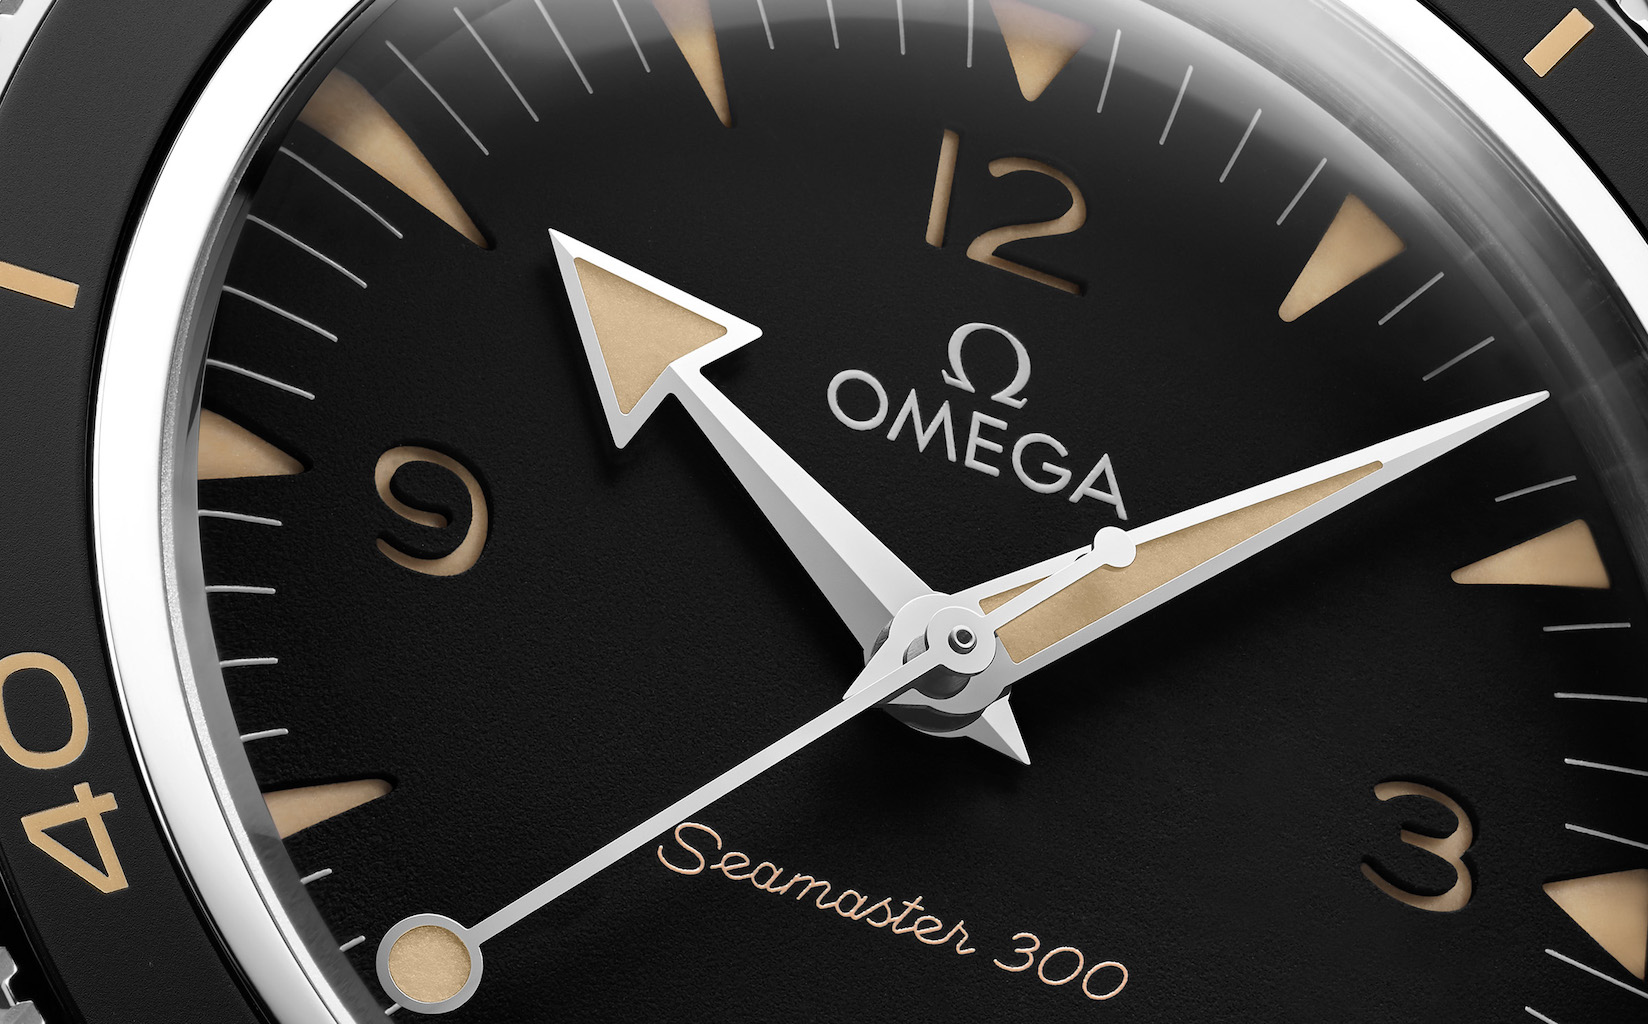 OMEGA Seamaster 300 Watch Details